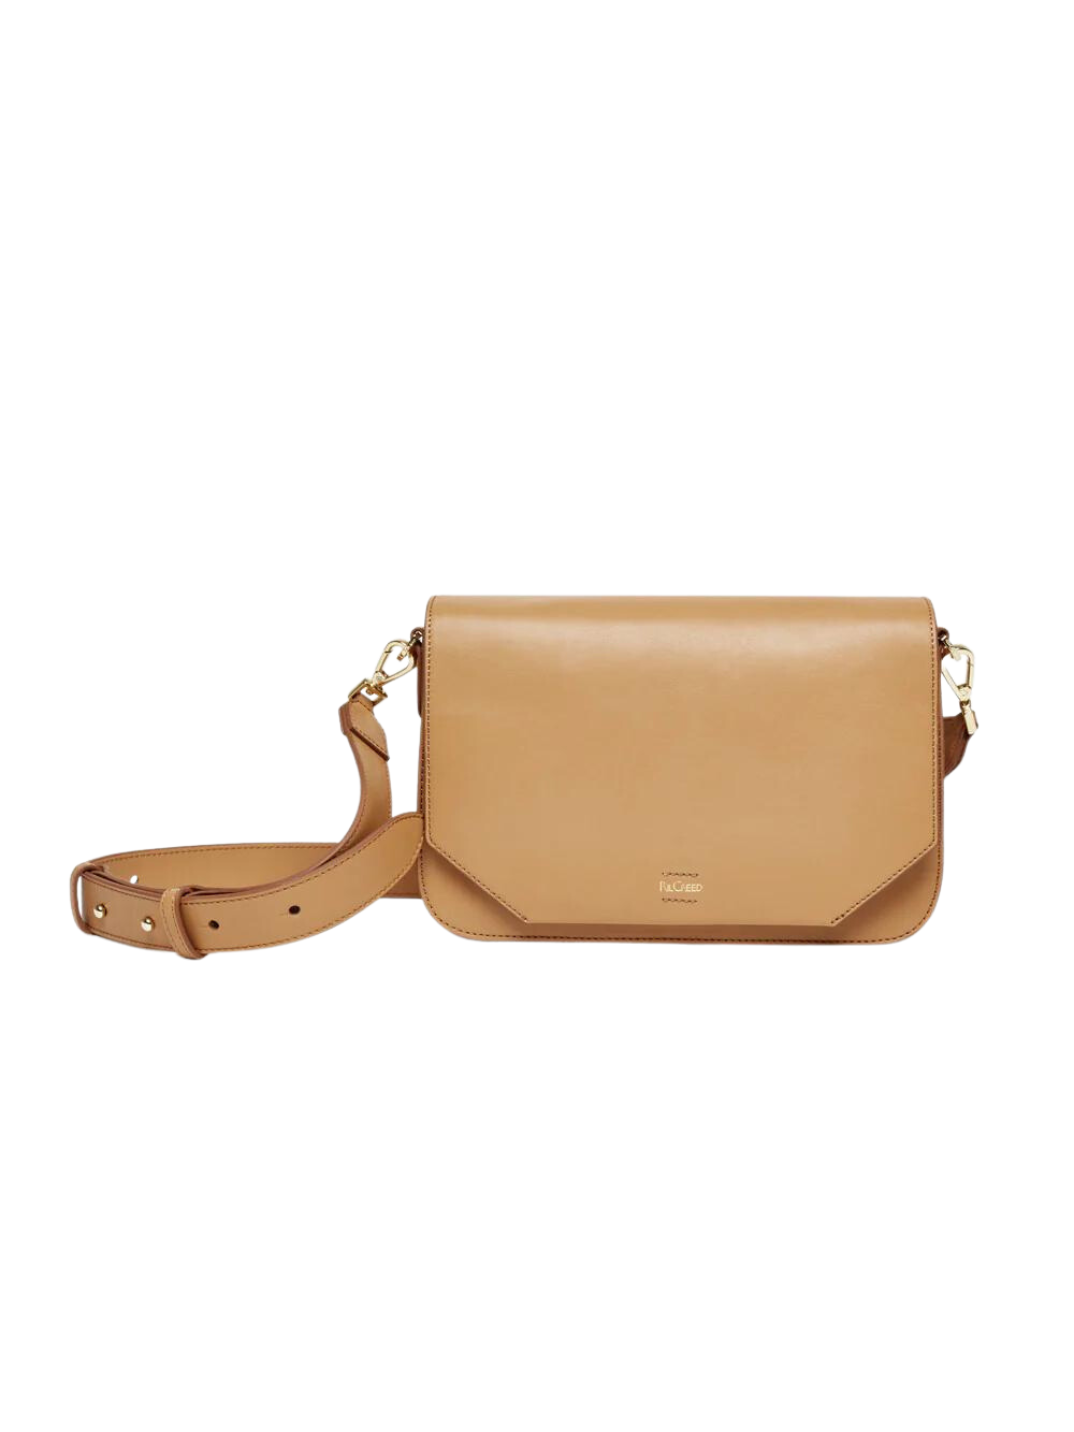 women's purse handbag stylish women's accessories genuine leather